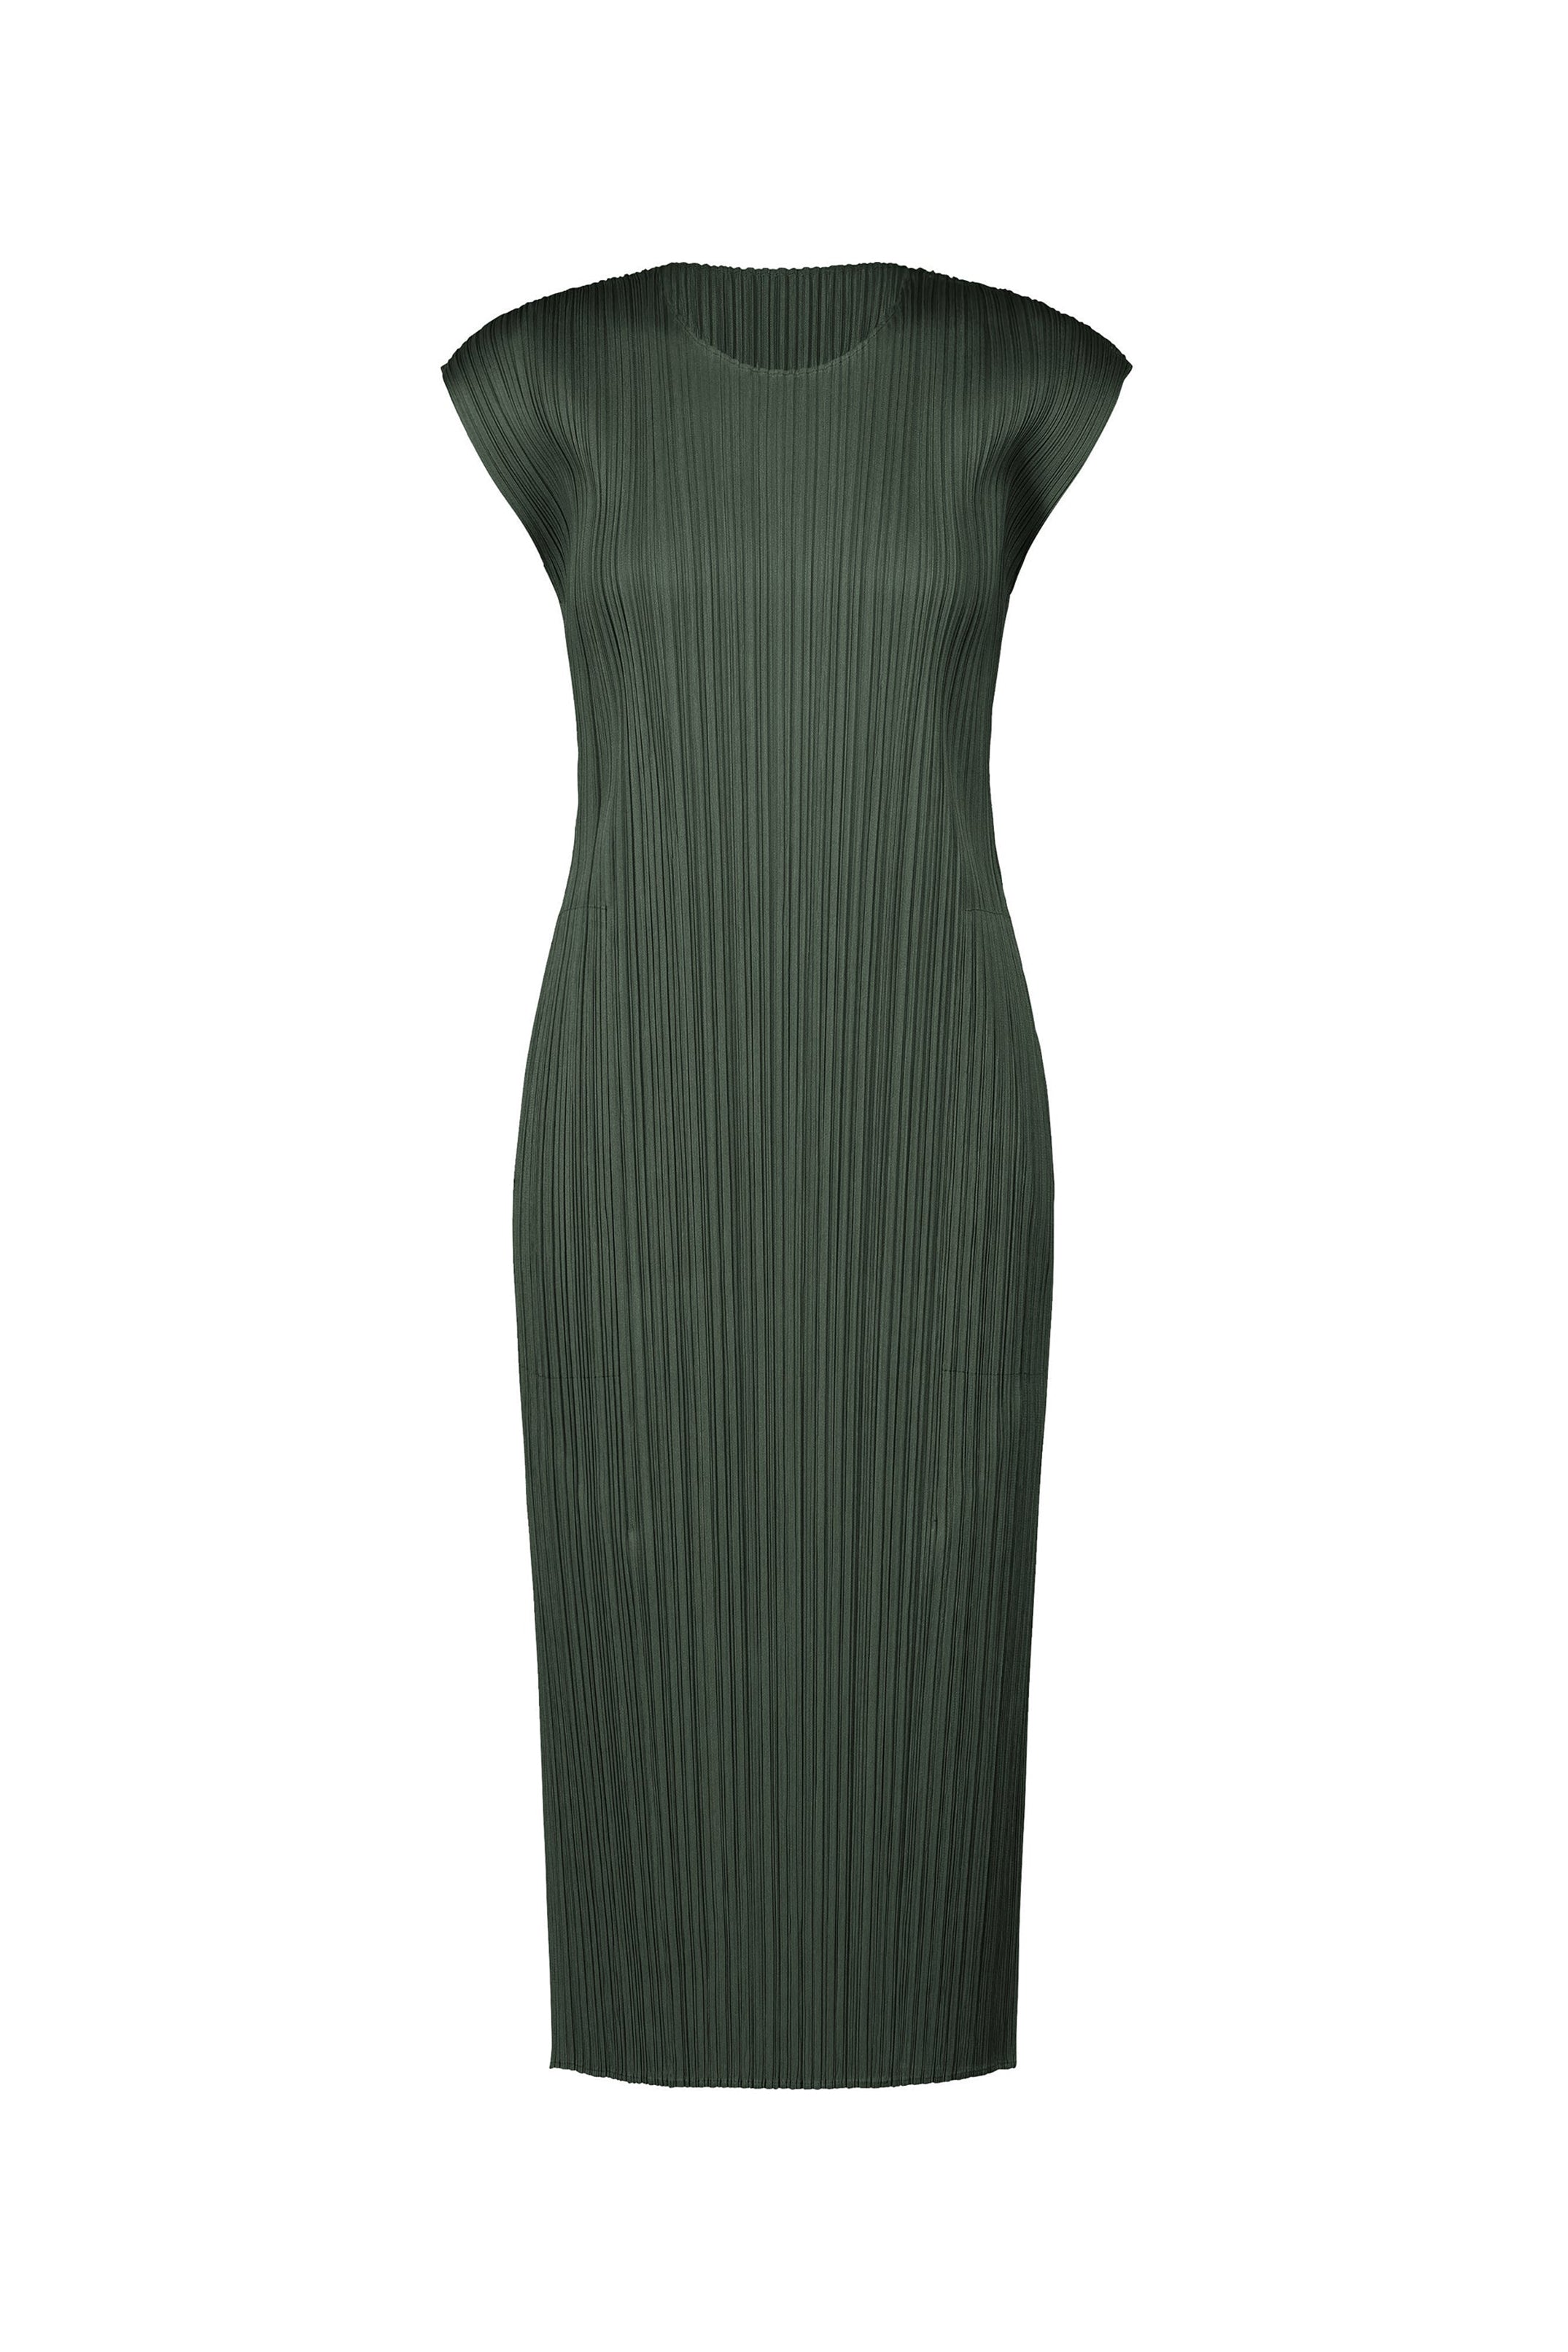 Pleats Please Monthly Colors: July Dress in Dark Green – Ashia Mode